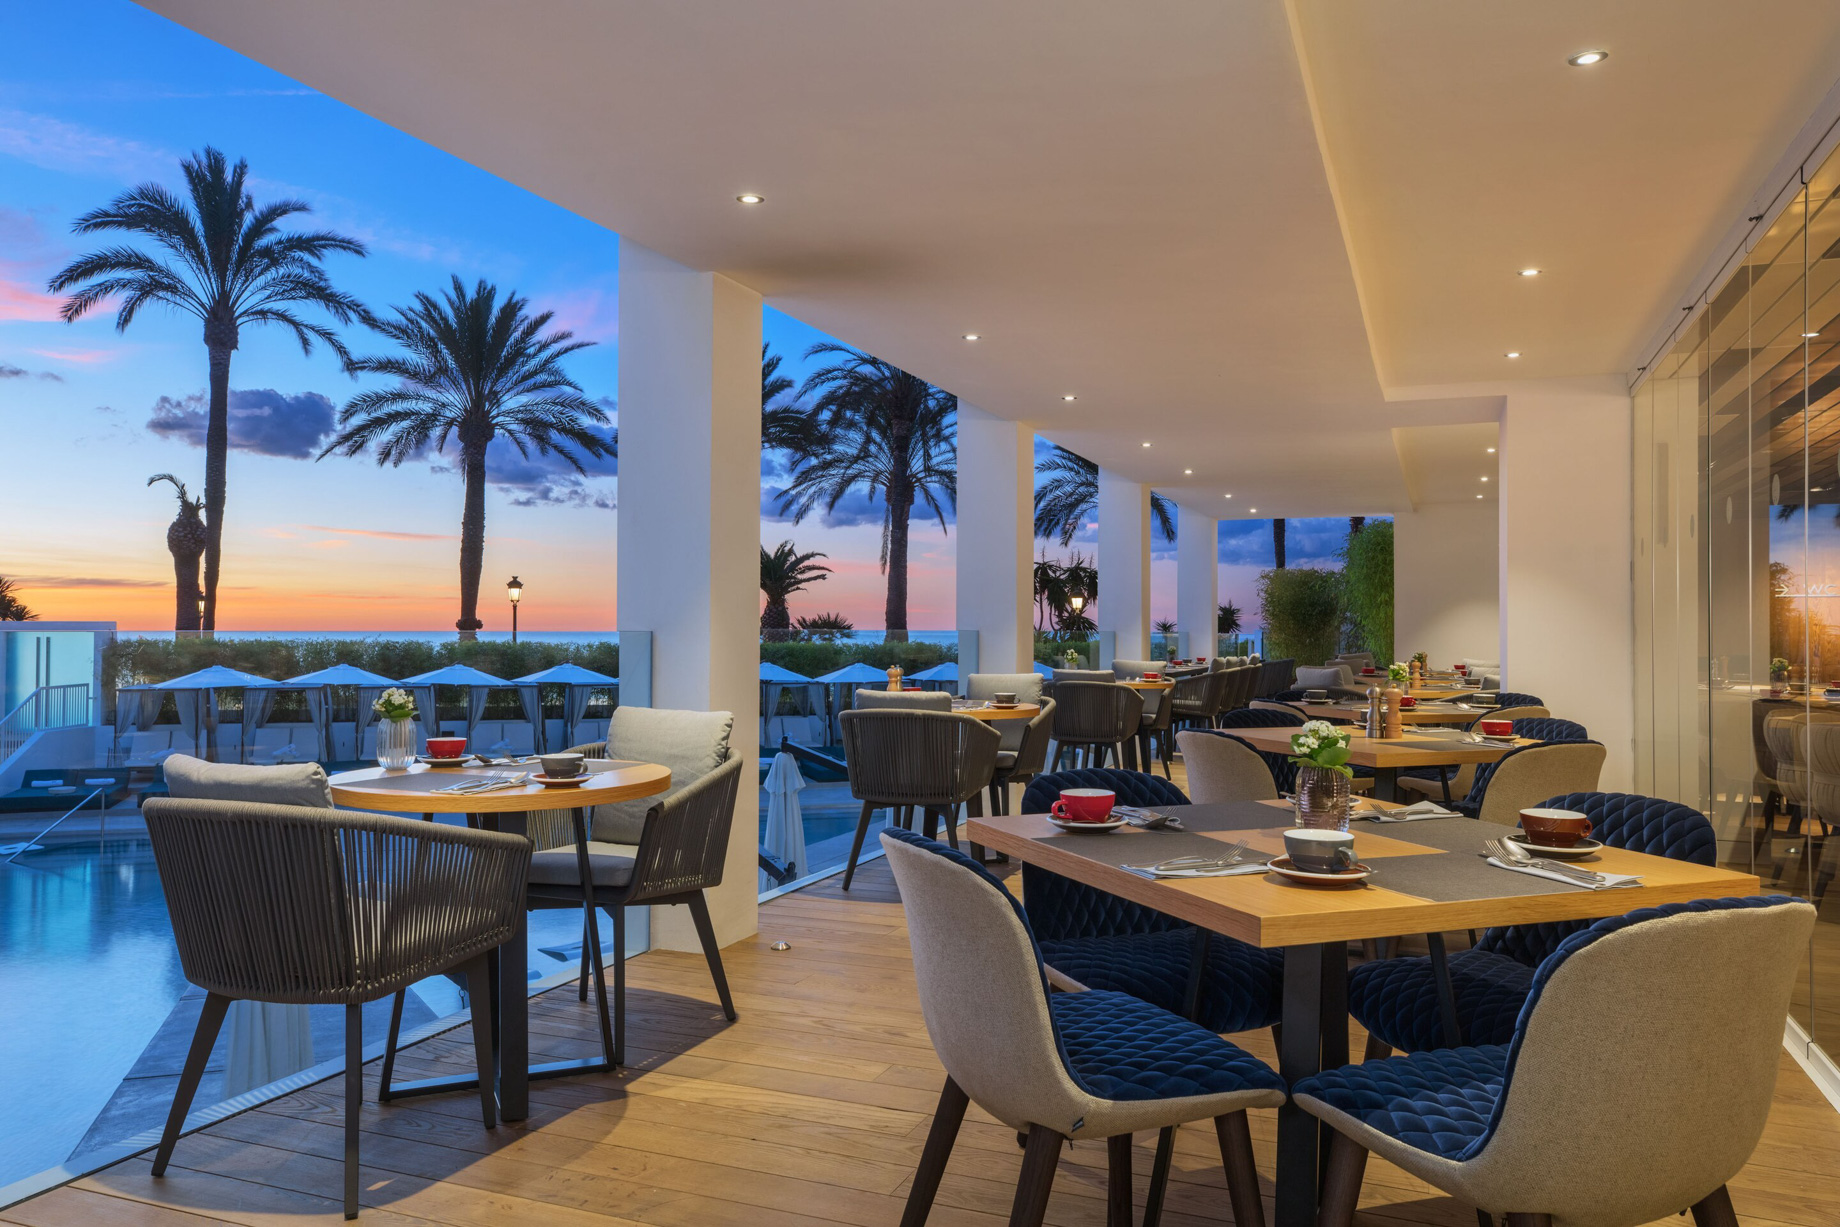 W Ibiza Hotel – Santa Eulalia del Rio, Spain – La Llama Sunset